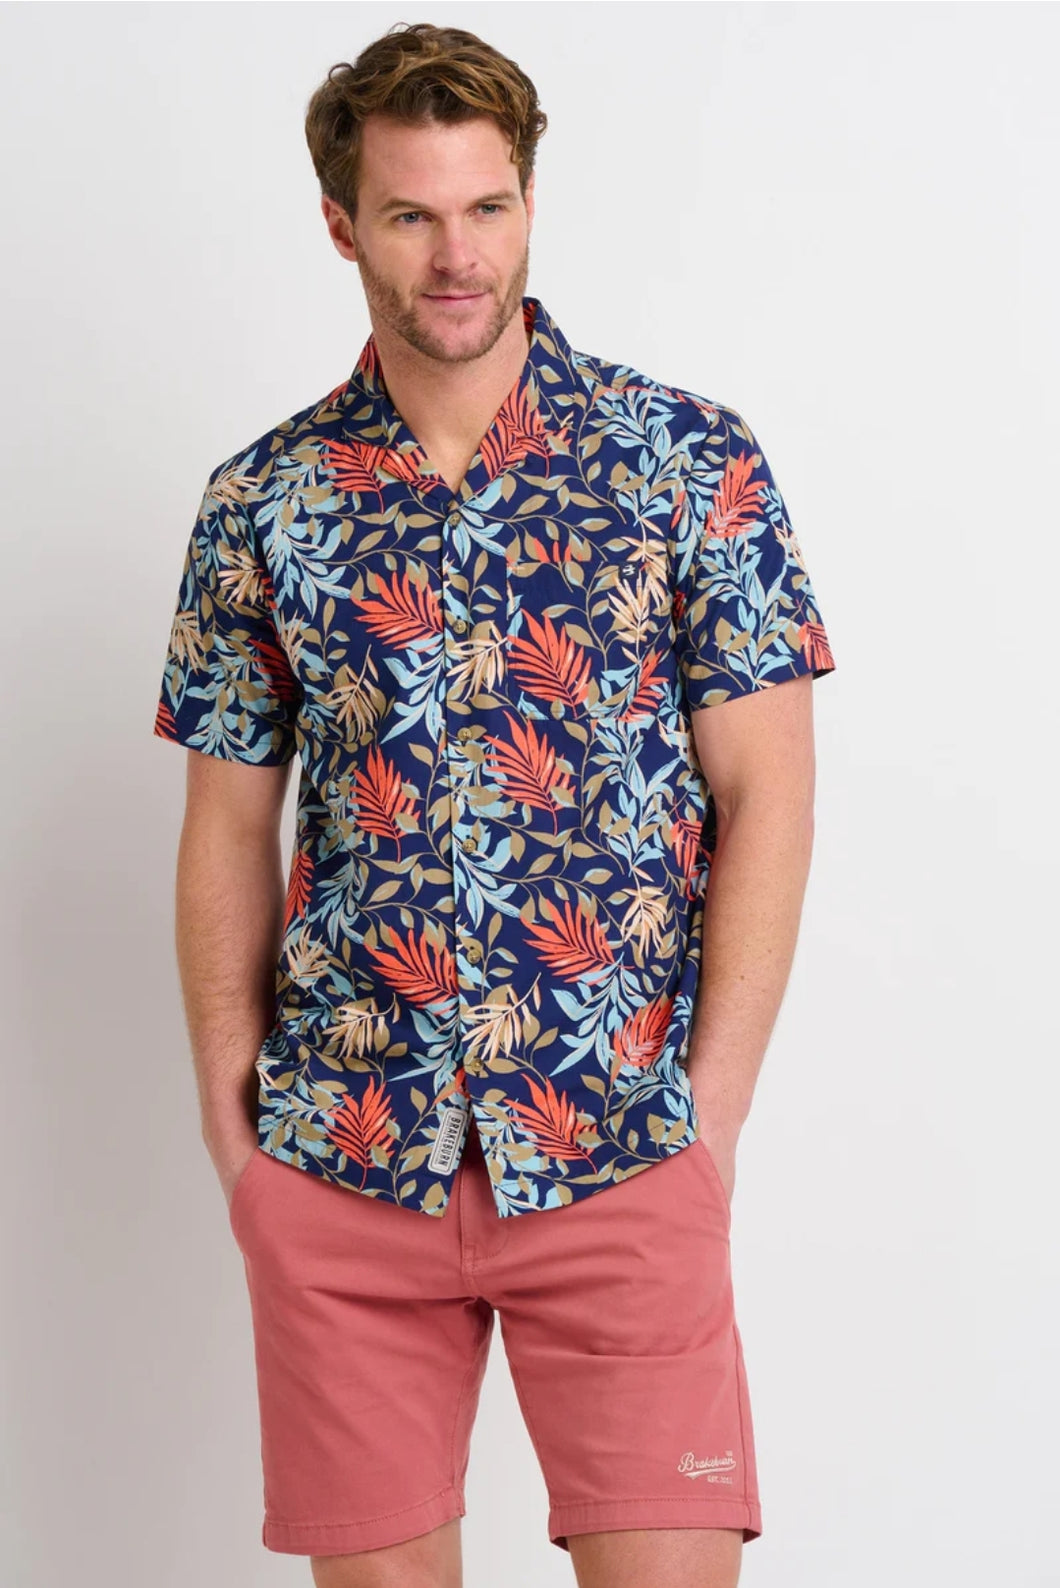 Trailing Tropic Resort Short Sleeve Shirt